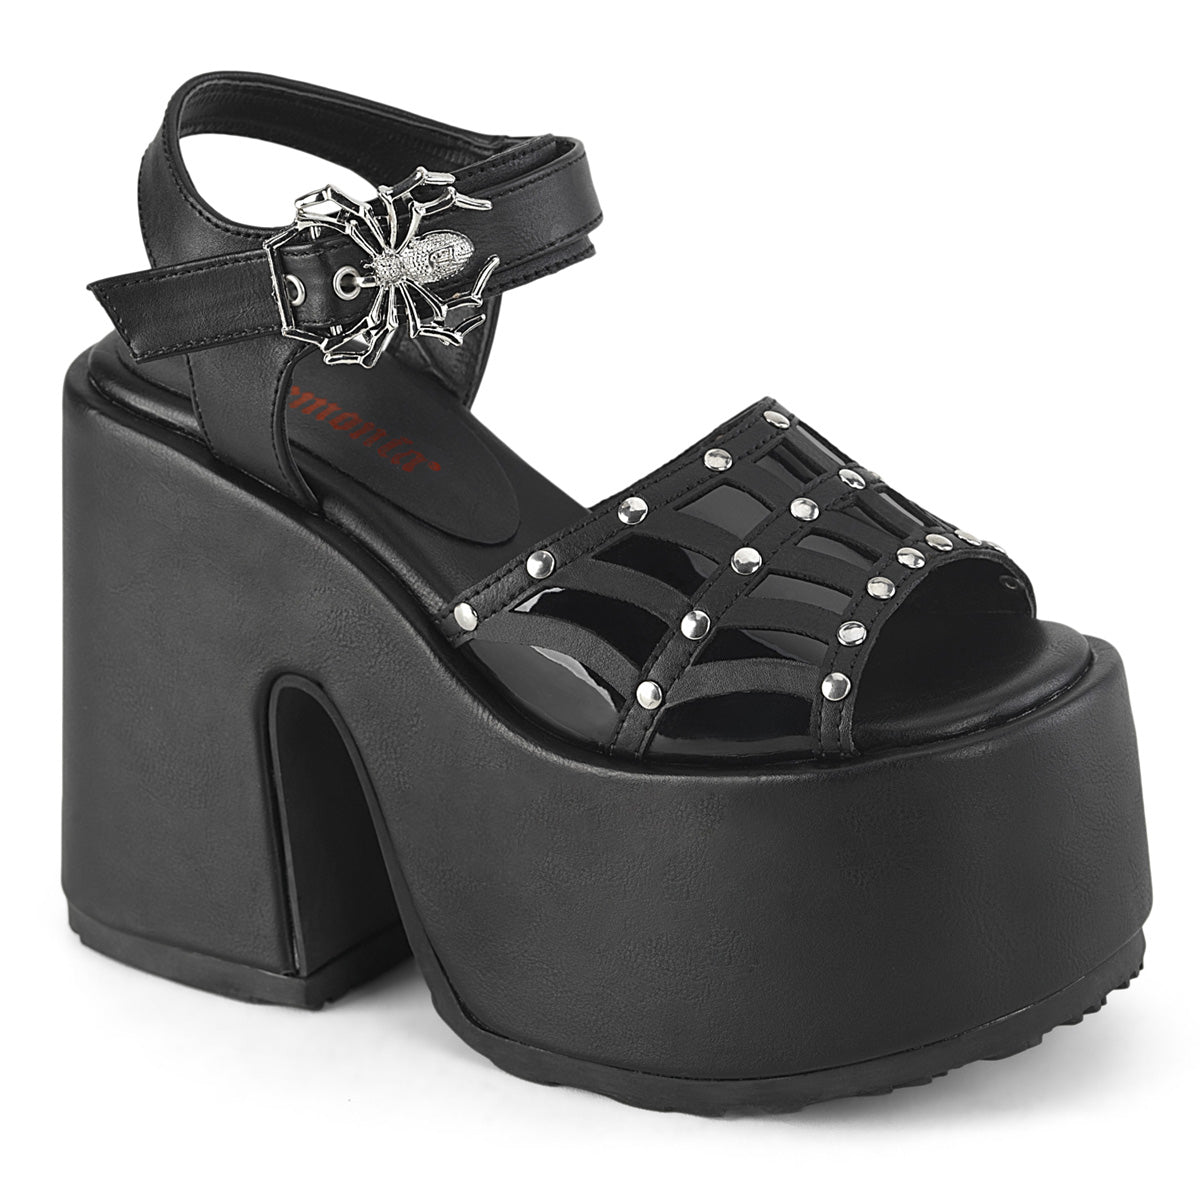 CAMEL-17 Spiderweb Sandals by Demonia – The Dark Side of Fashion